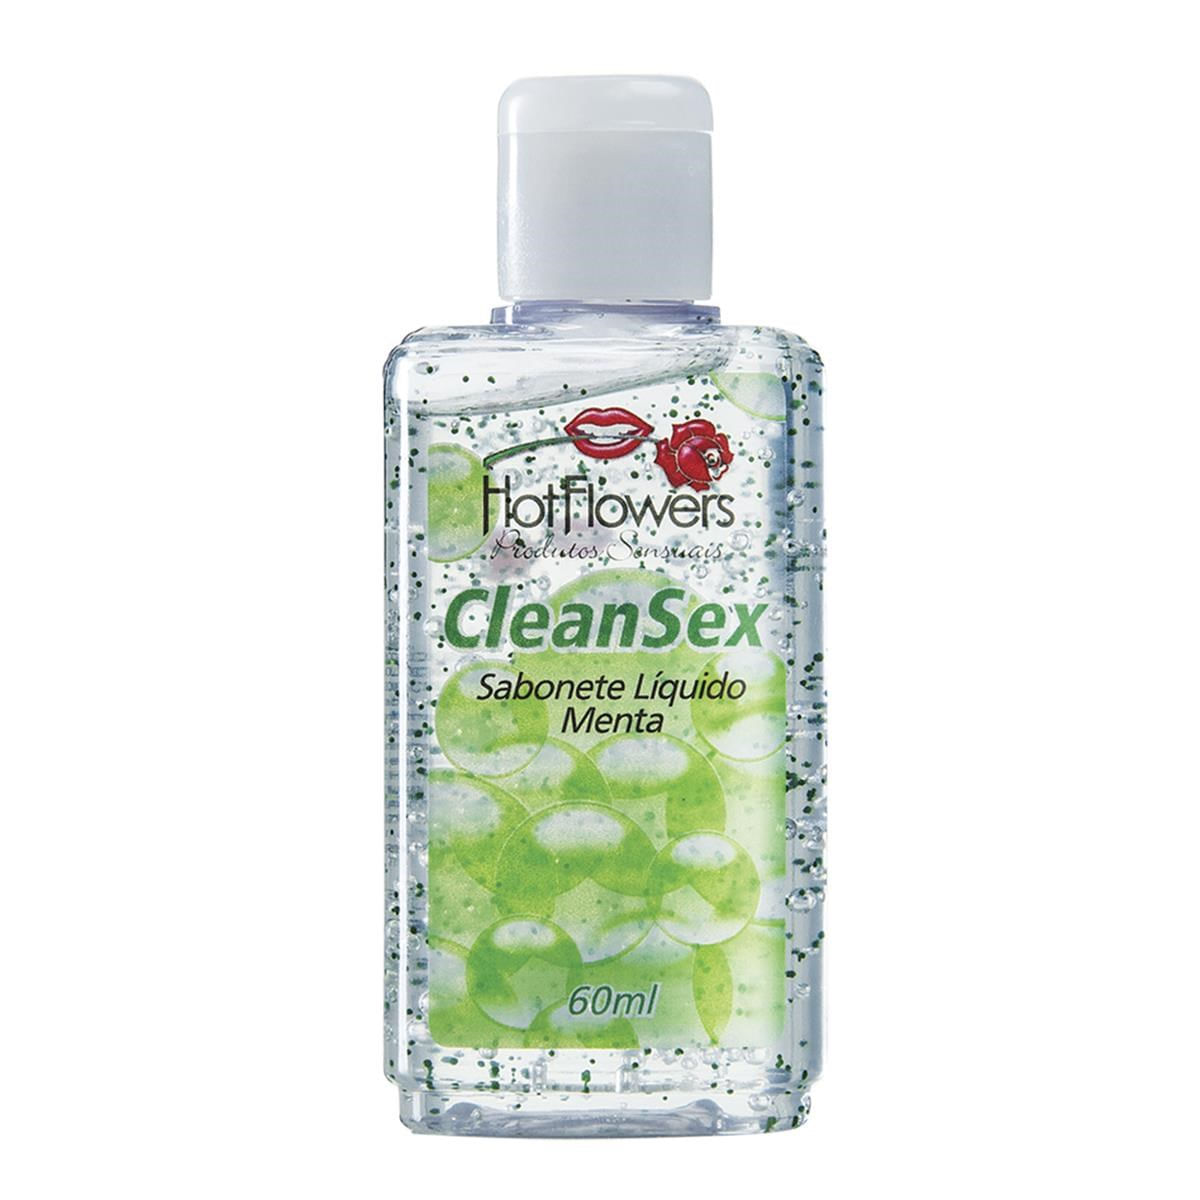 CleanSex Sabonete LÍquido Menta 60ml Hot Flowers - Miess